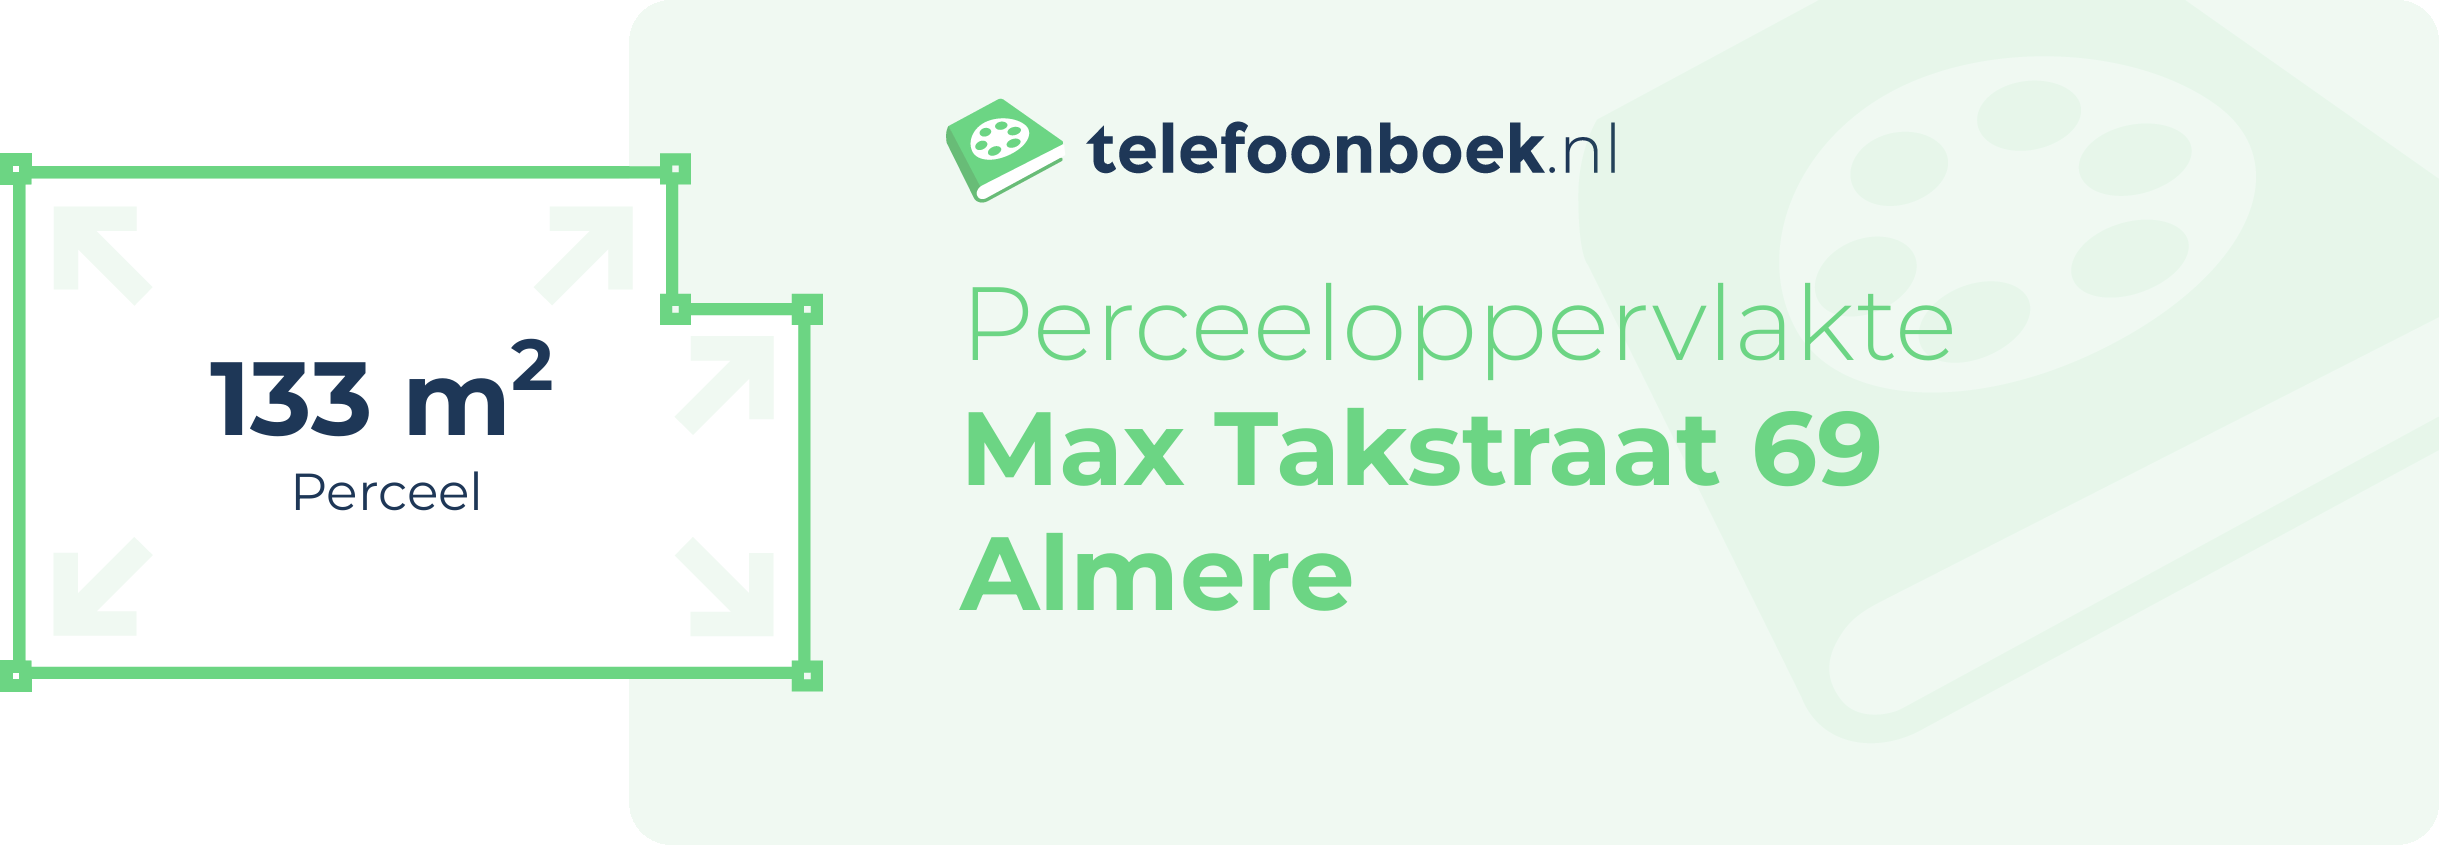 Perceeloppervlakte Max Takstraat 69 Almere